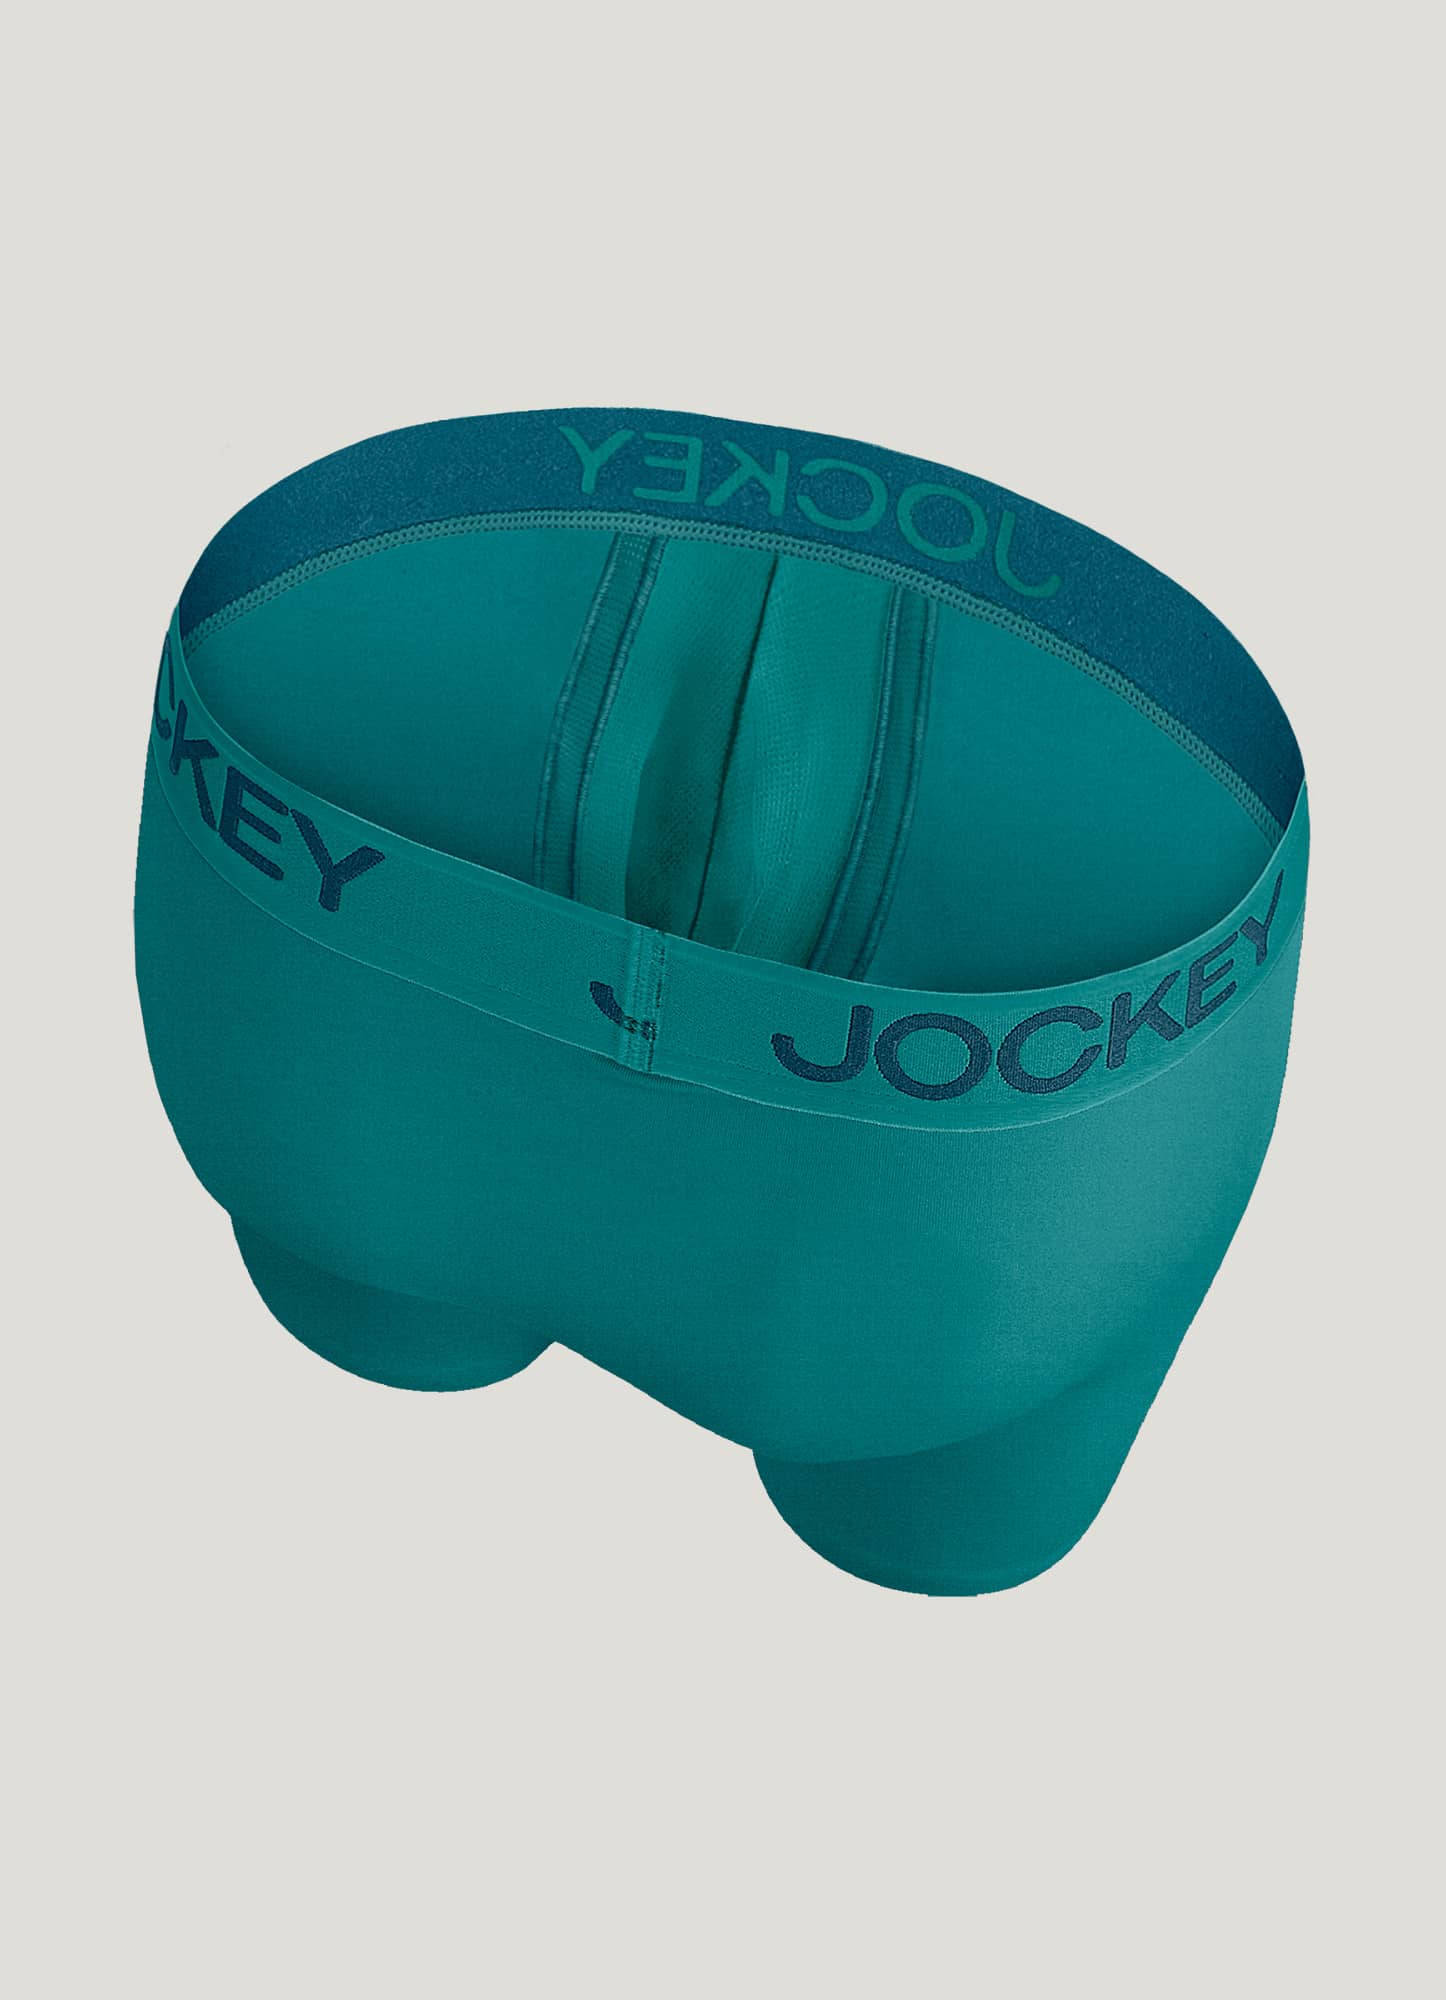 Jockey® Active Ultra Soft Modal 6 Boxer Brief